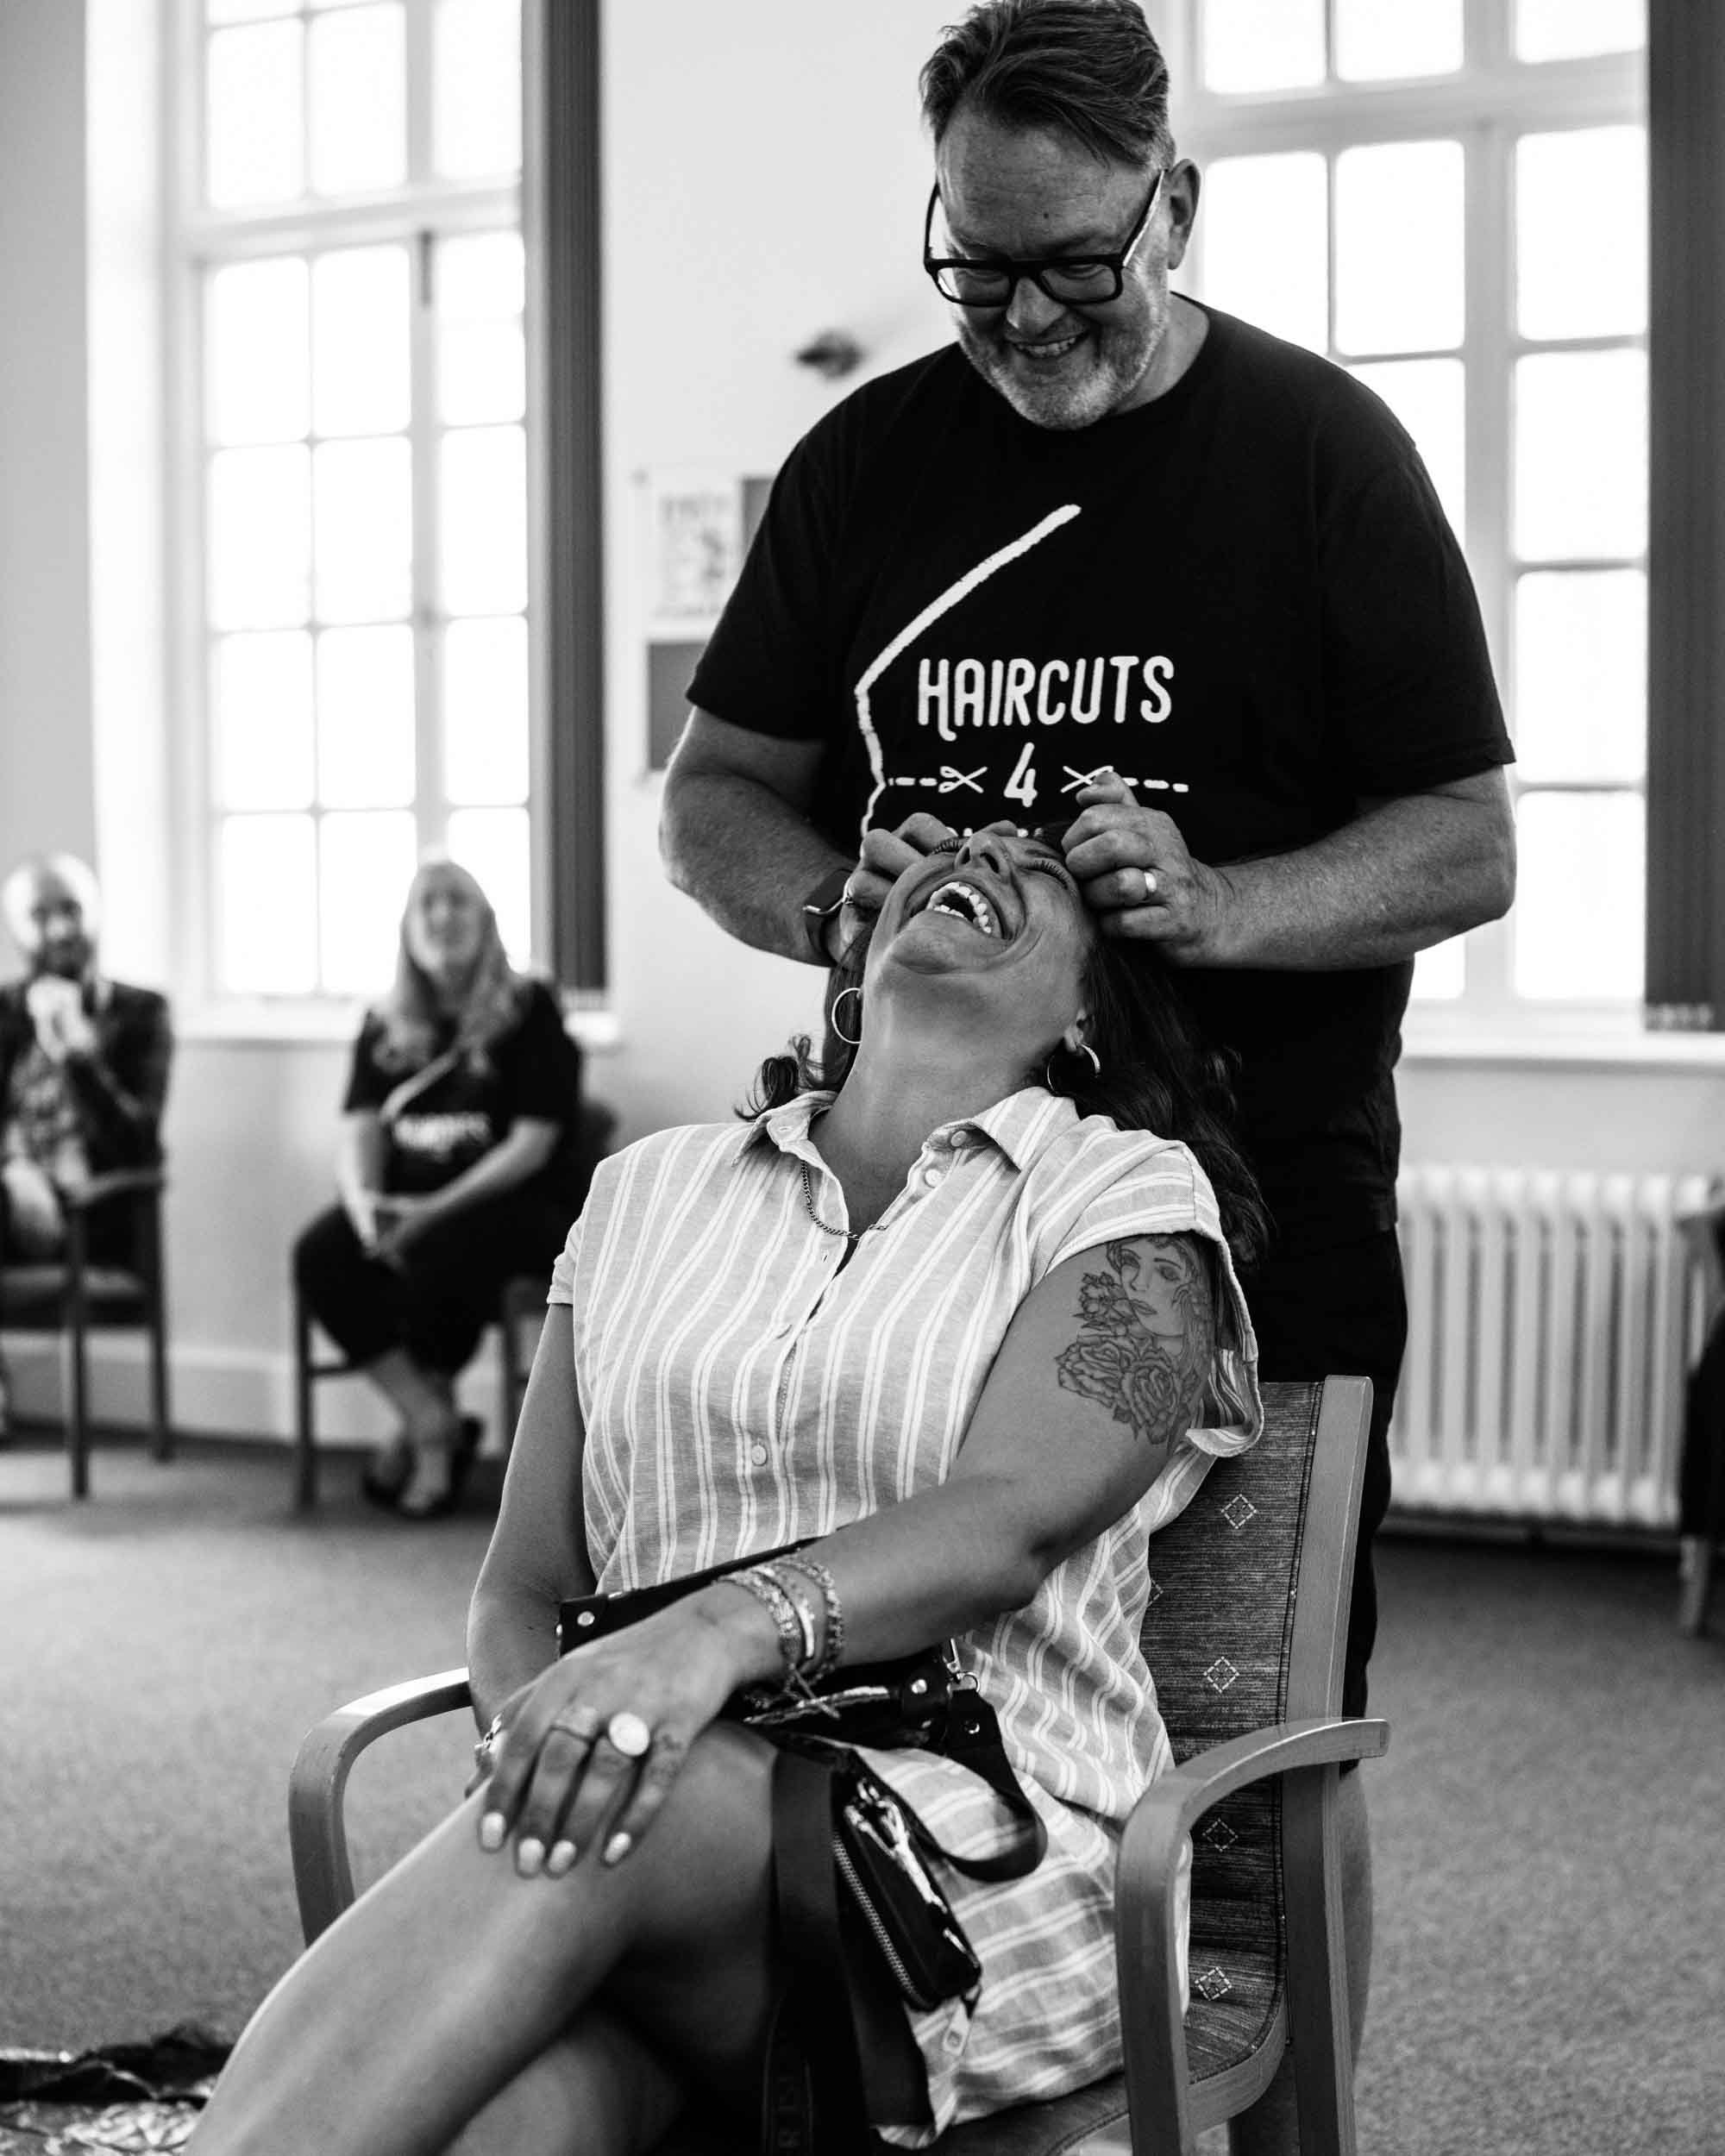 Haircuts4Homeless - Stewart Roberts Making Change